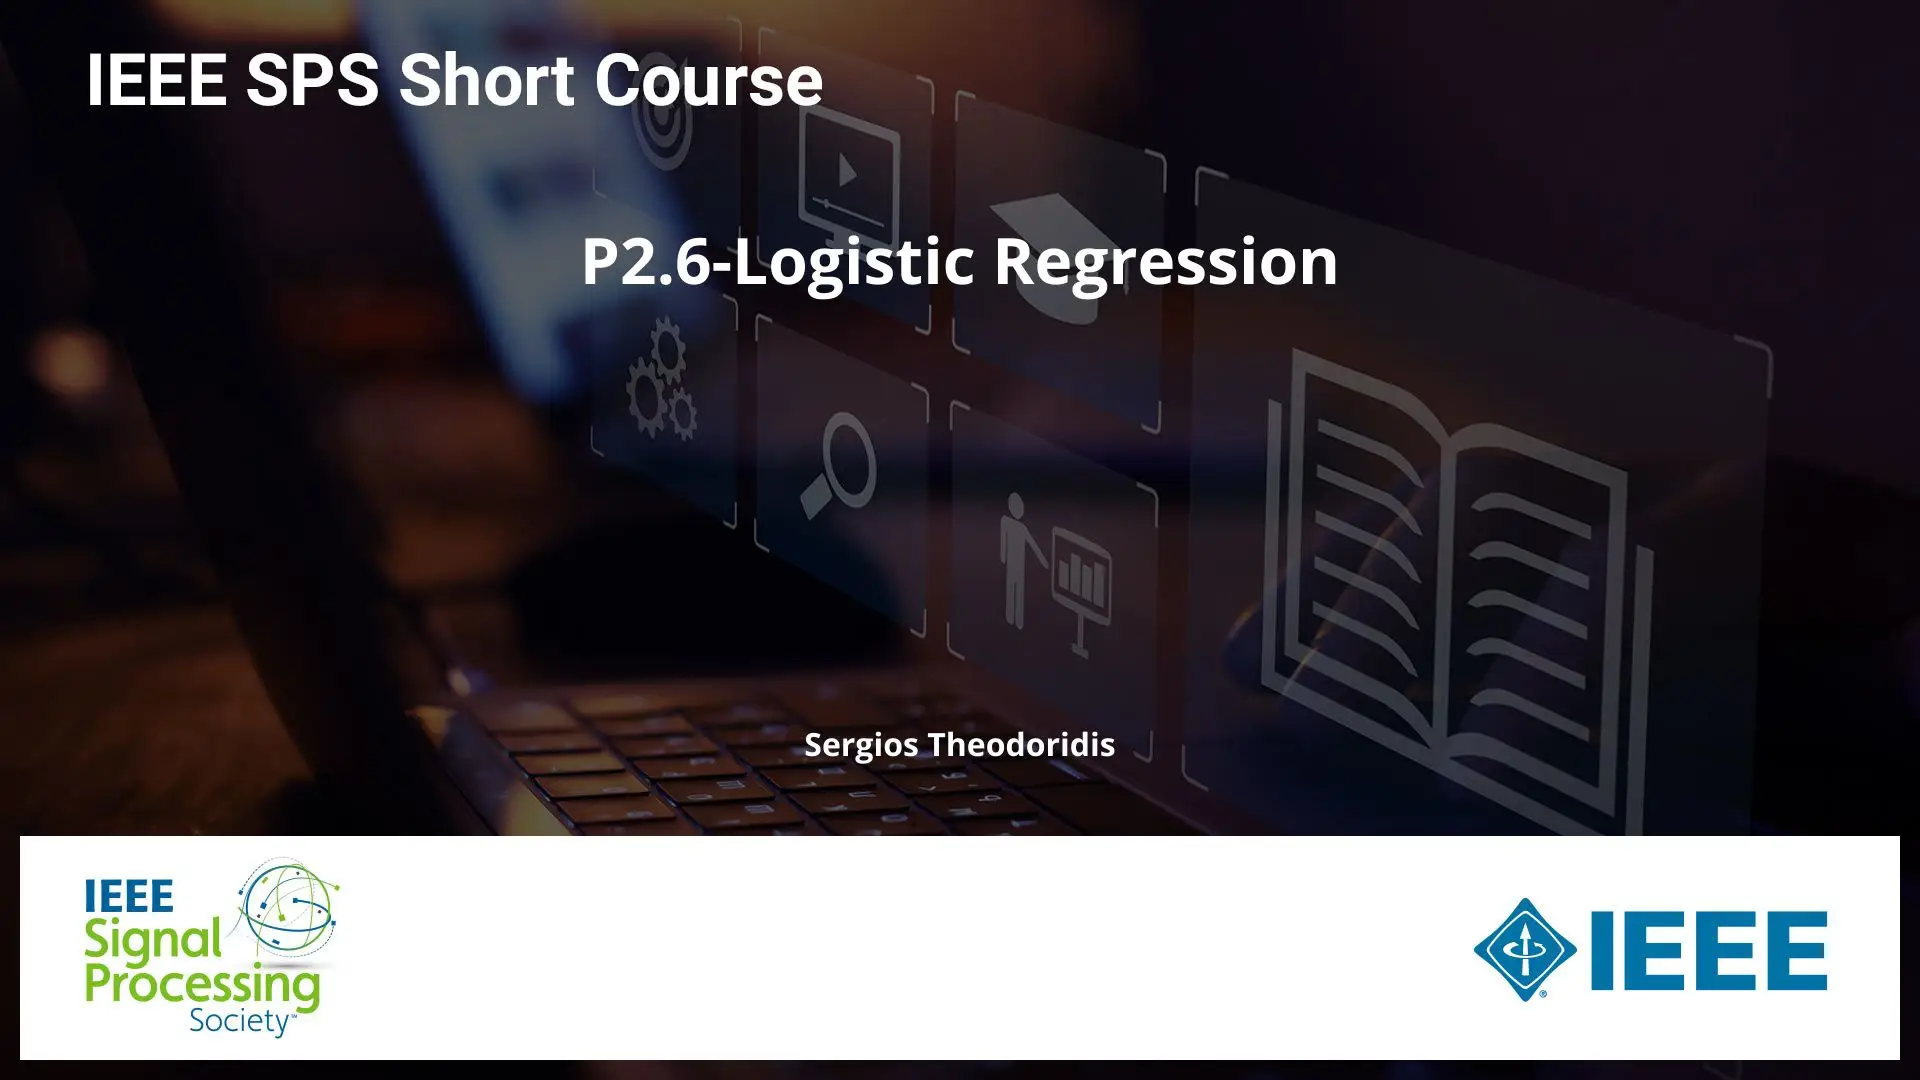 P2.6-Logistic Regression